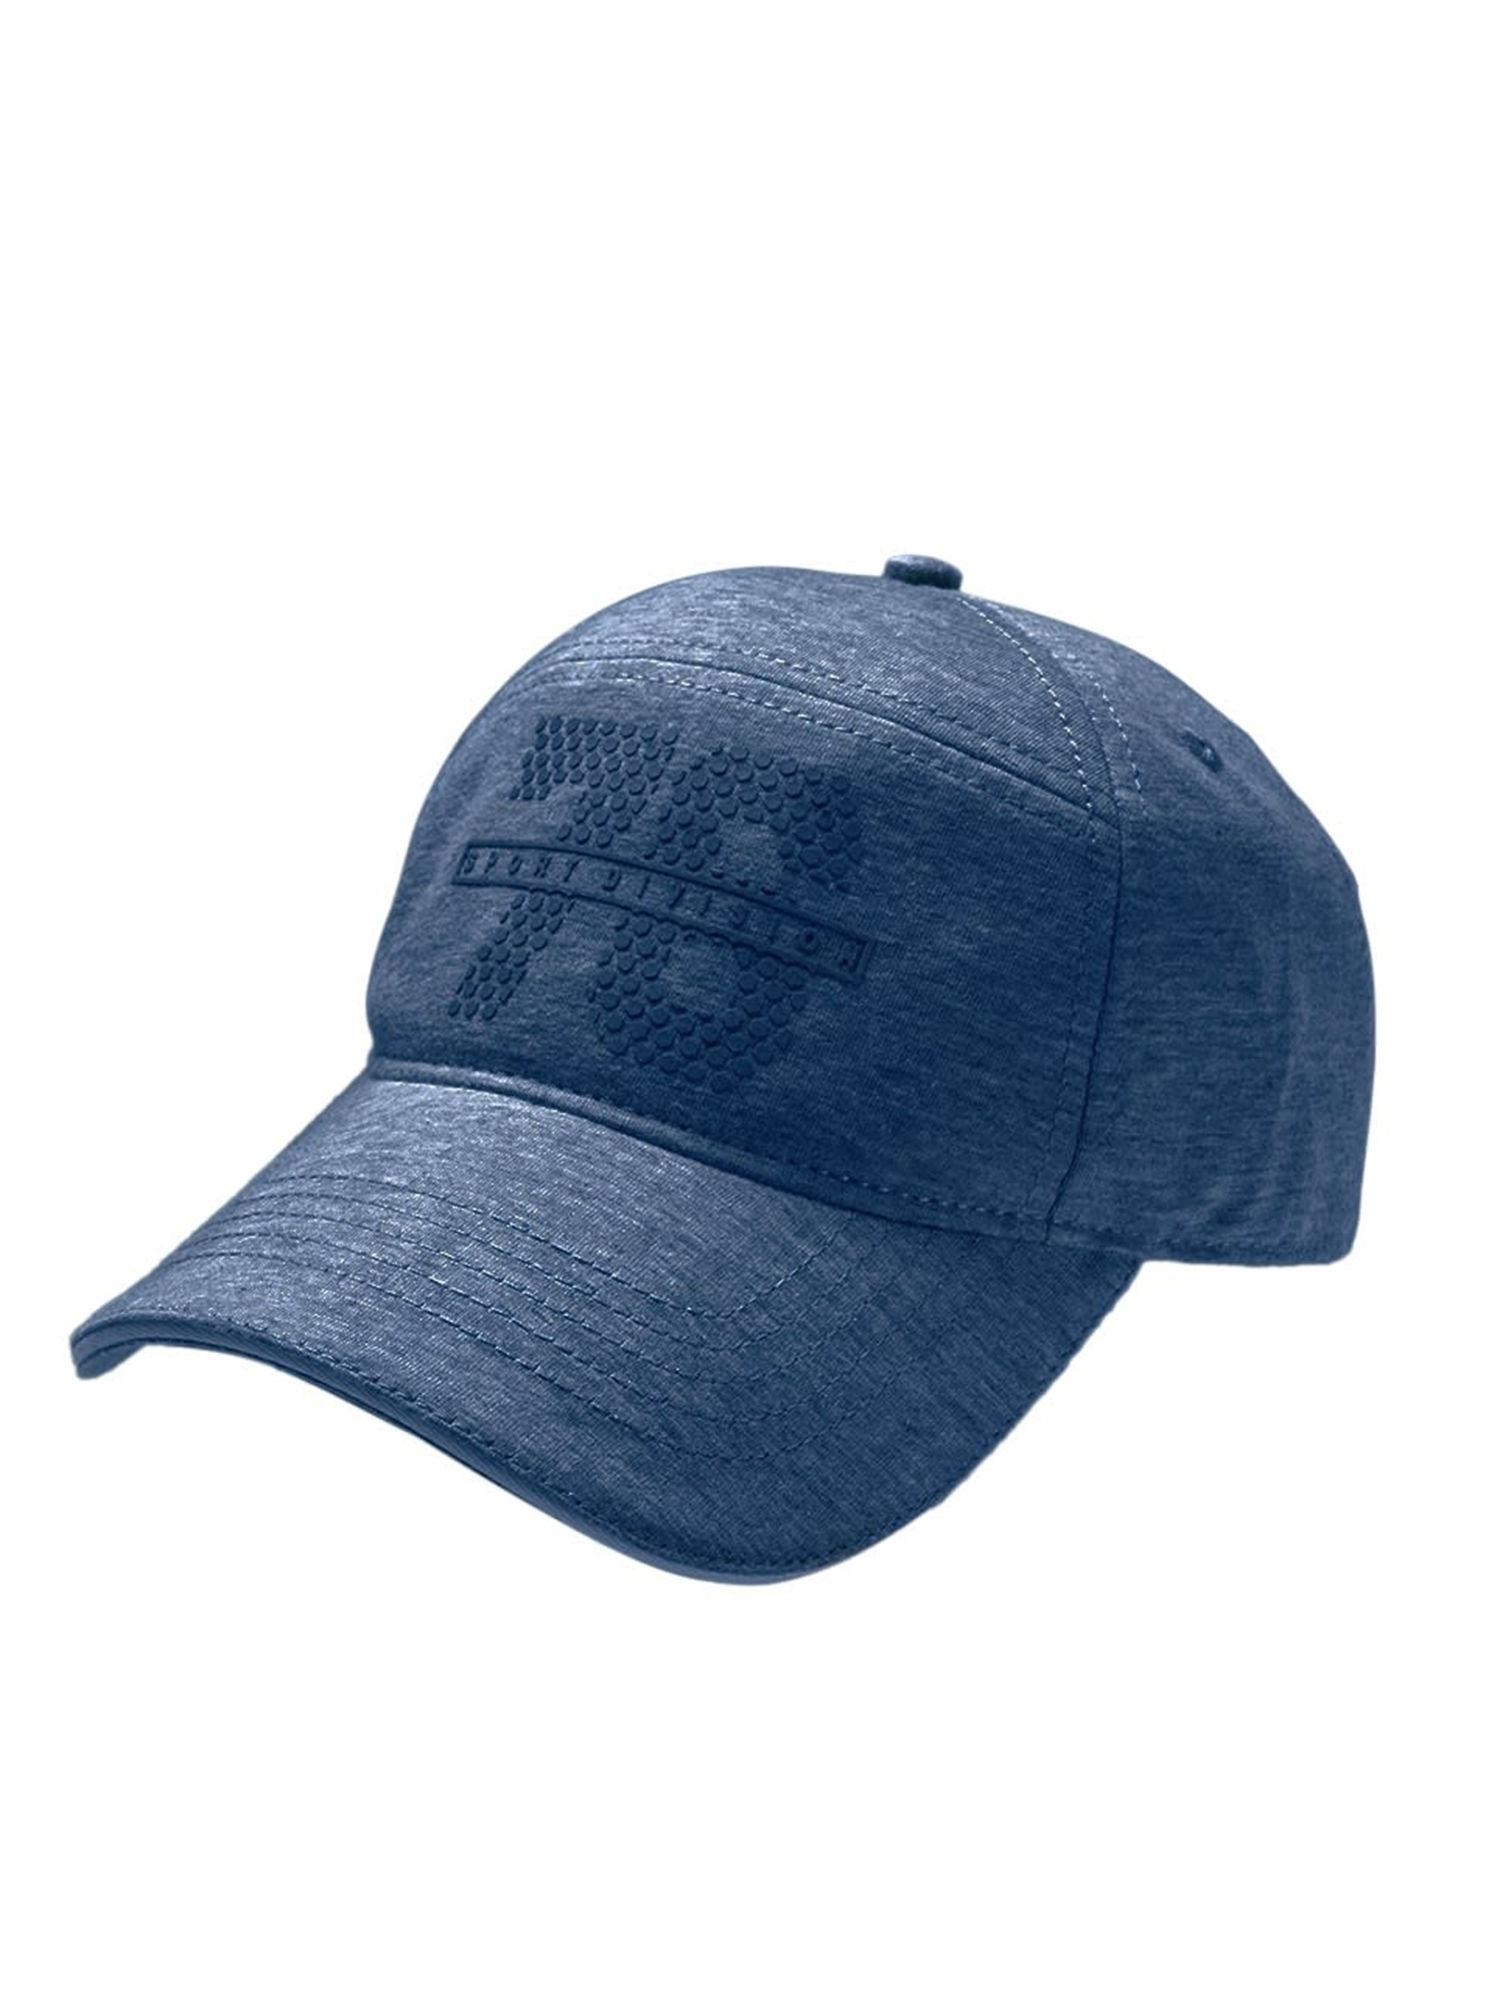 navy-blue-self-design-cap